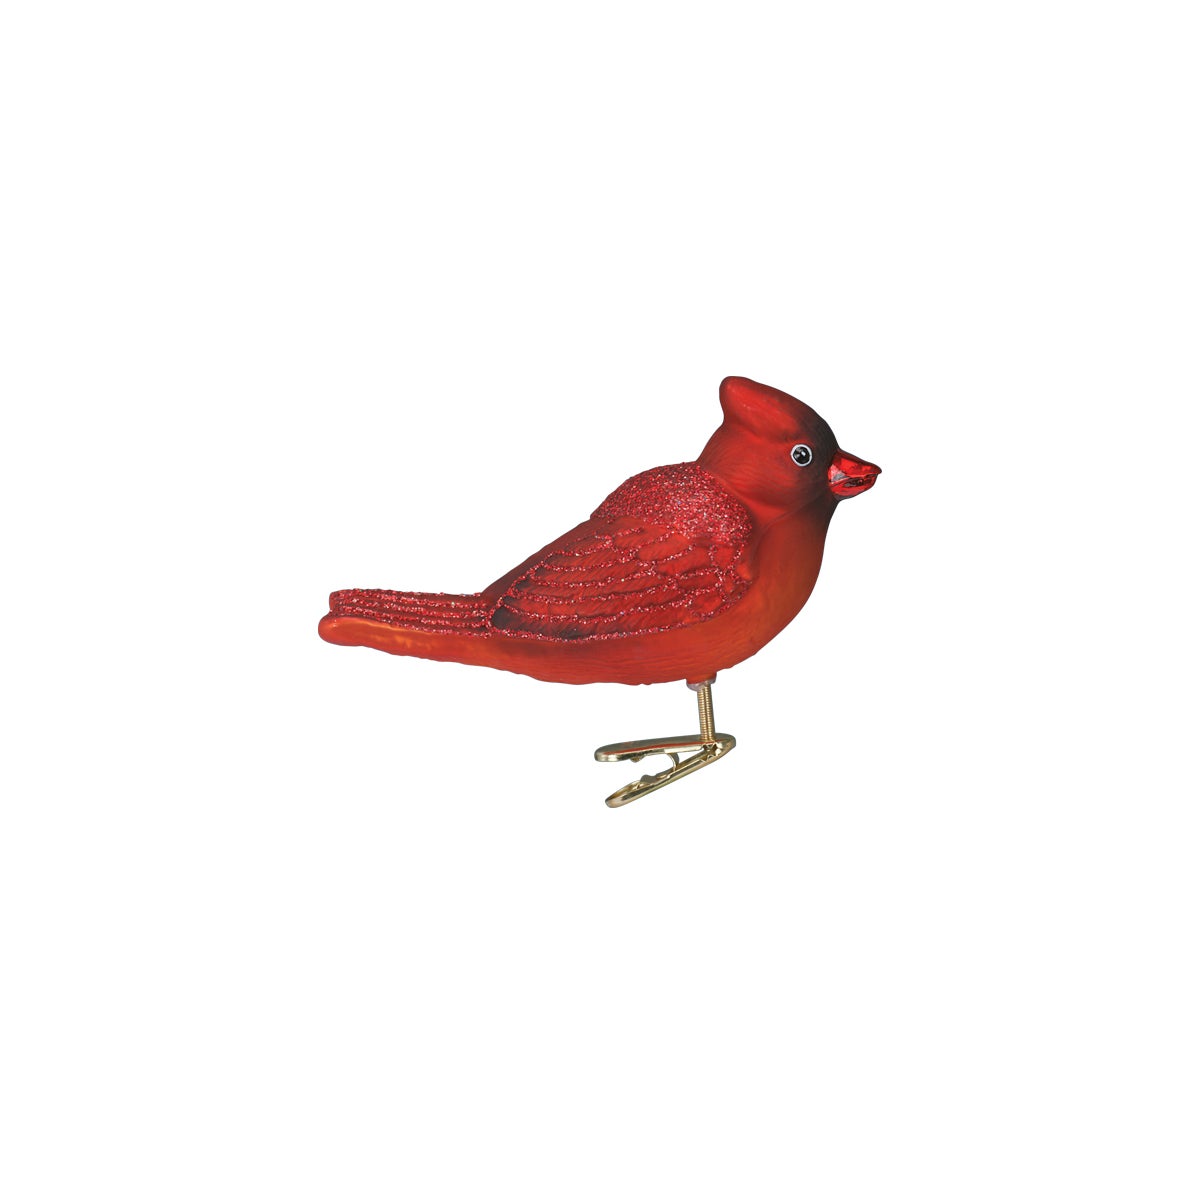 Bright Red Cardinal